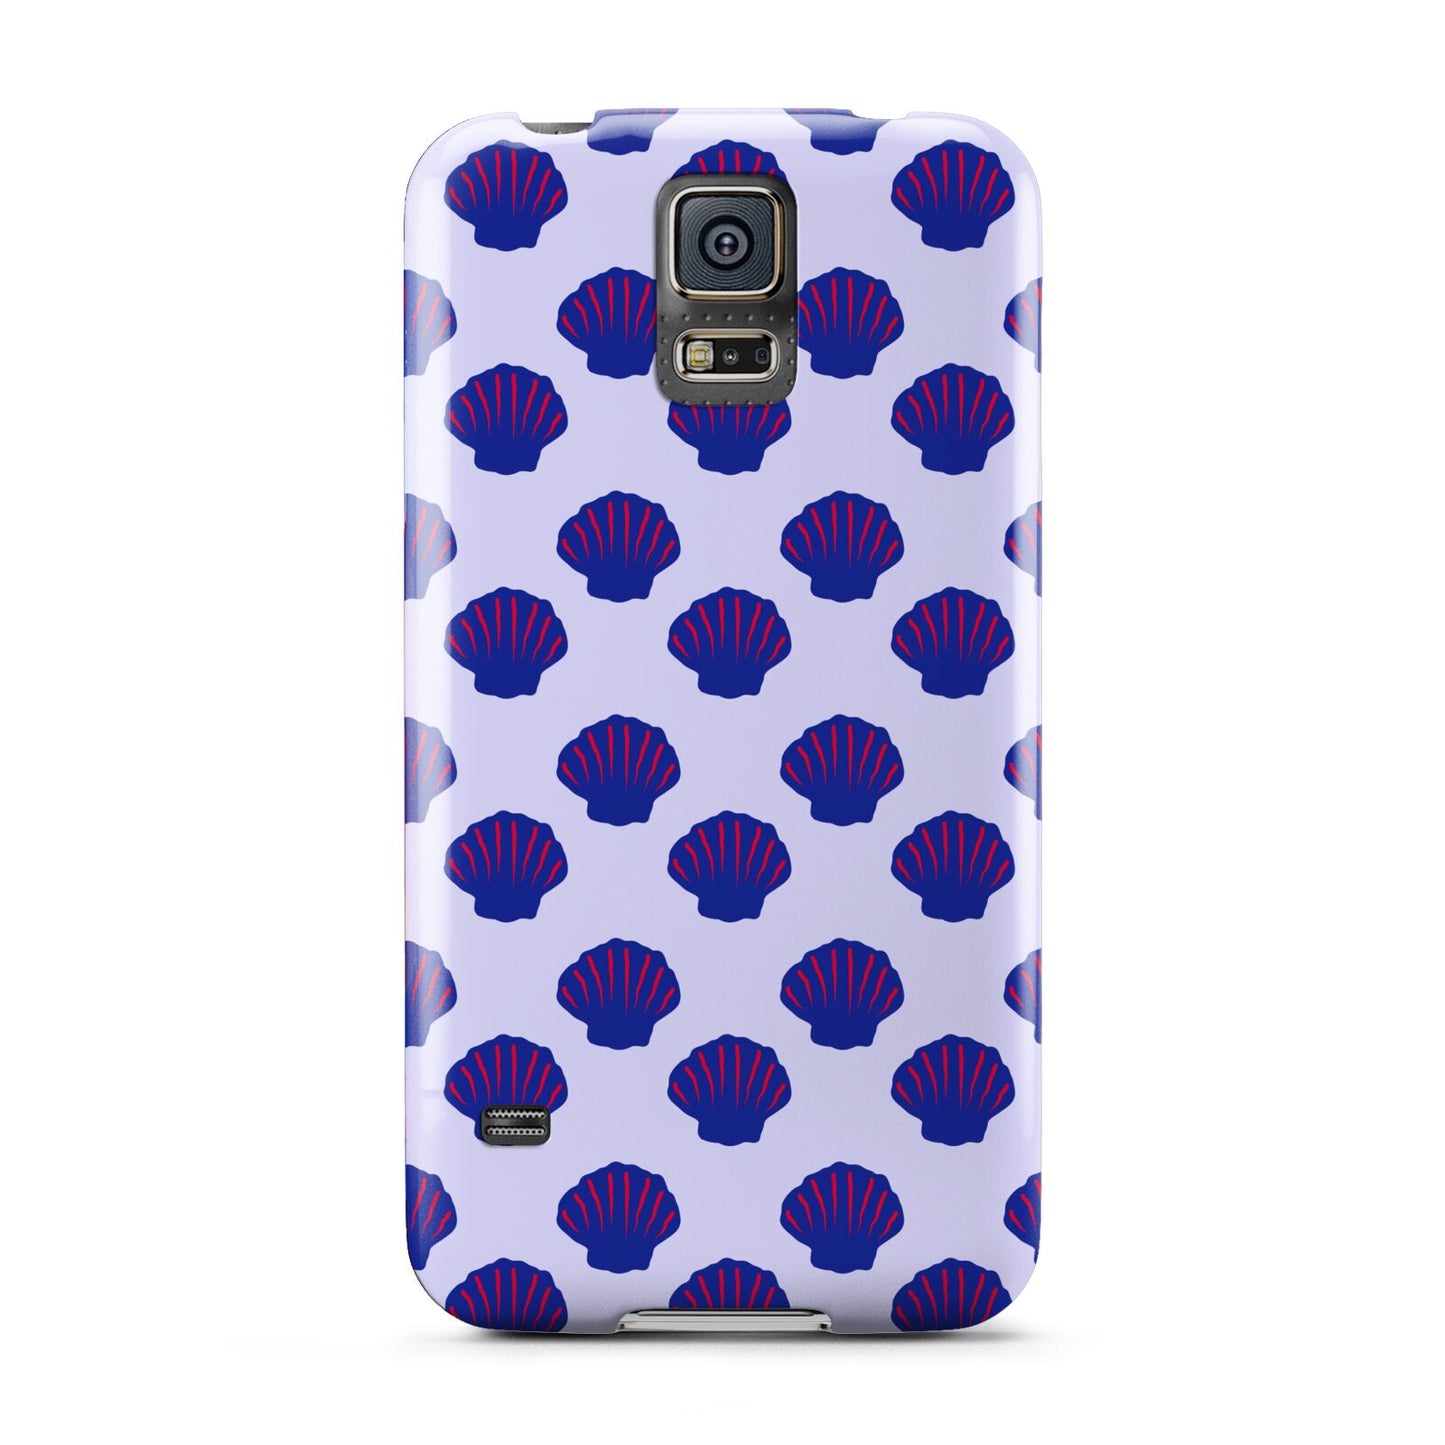 Shell Pattern Samsung Galaxy S5 Case